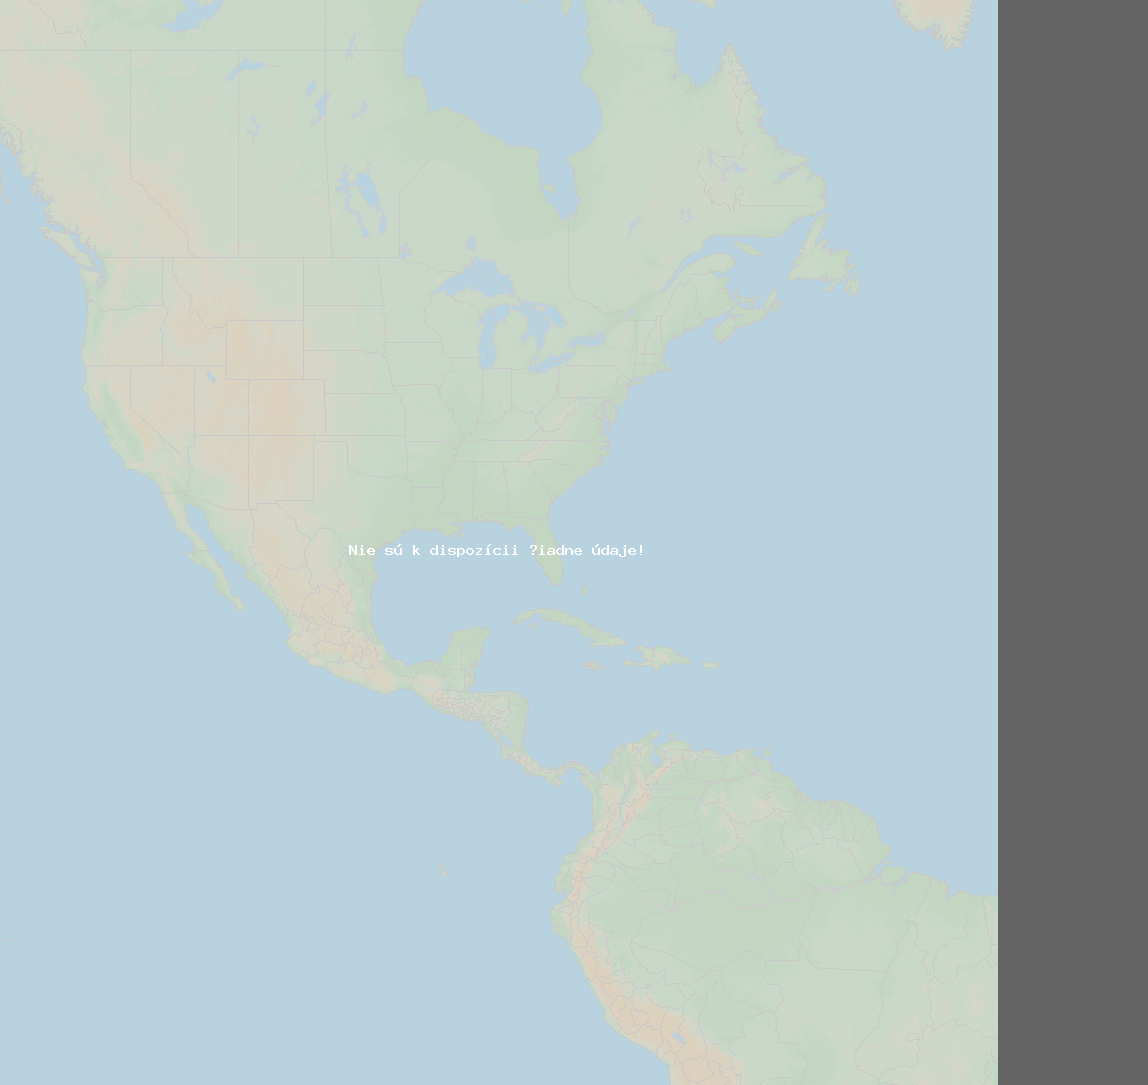 Pomer bleskov (Stanica Asheville) North America 2020 